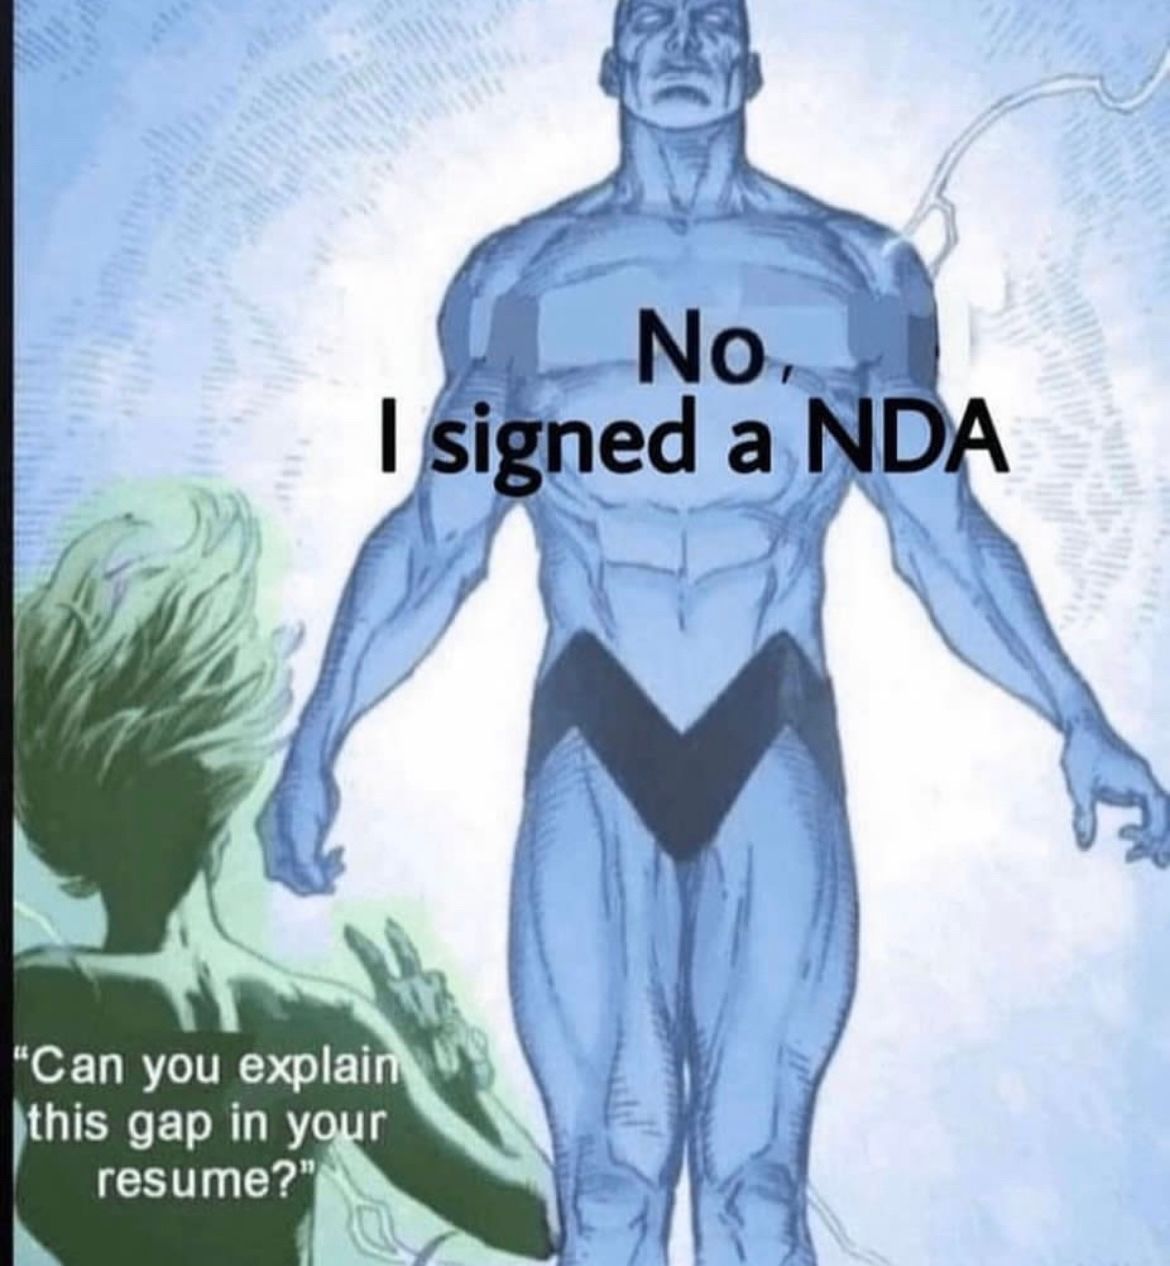 No, I signed an NDA